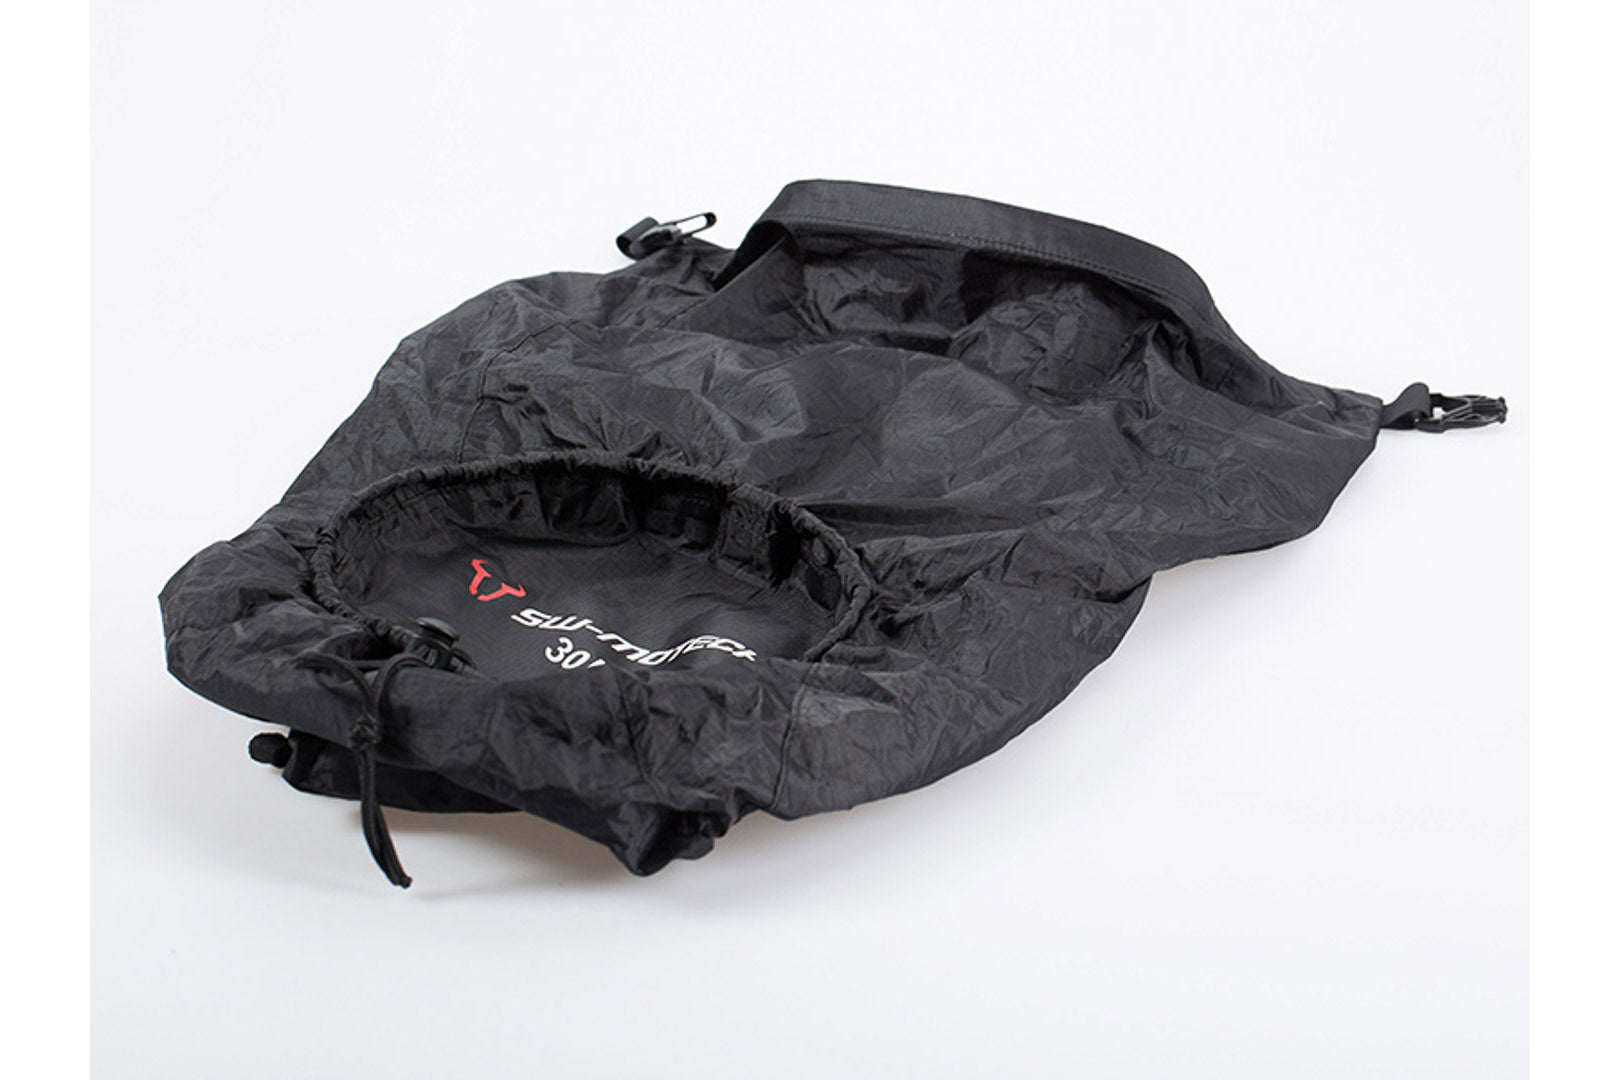 Flexpack Backpack 30 litre Water-resistant Foldable Black